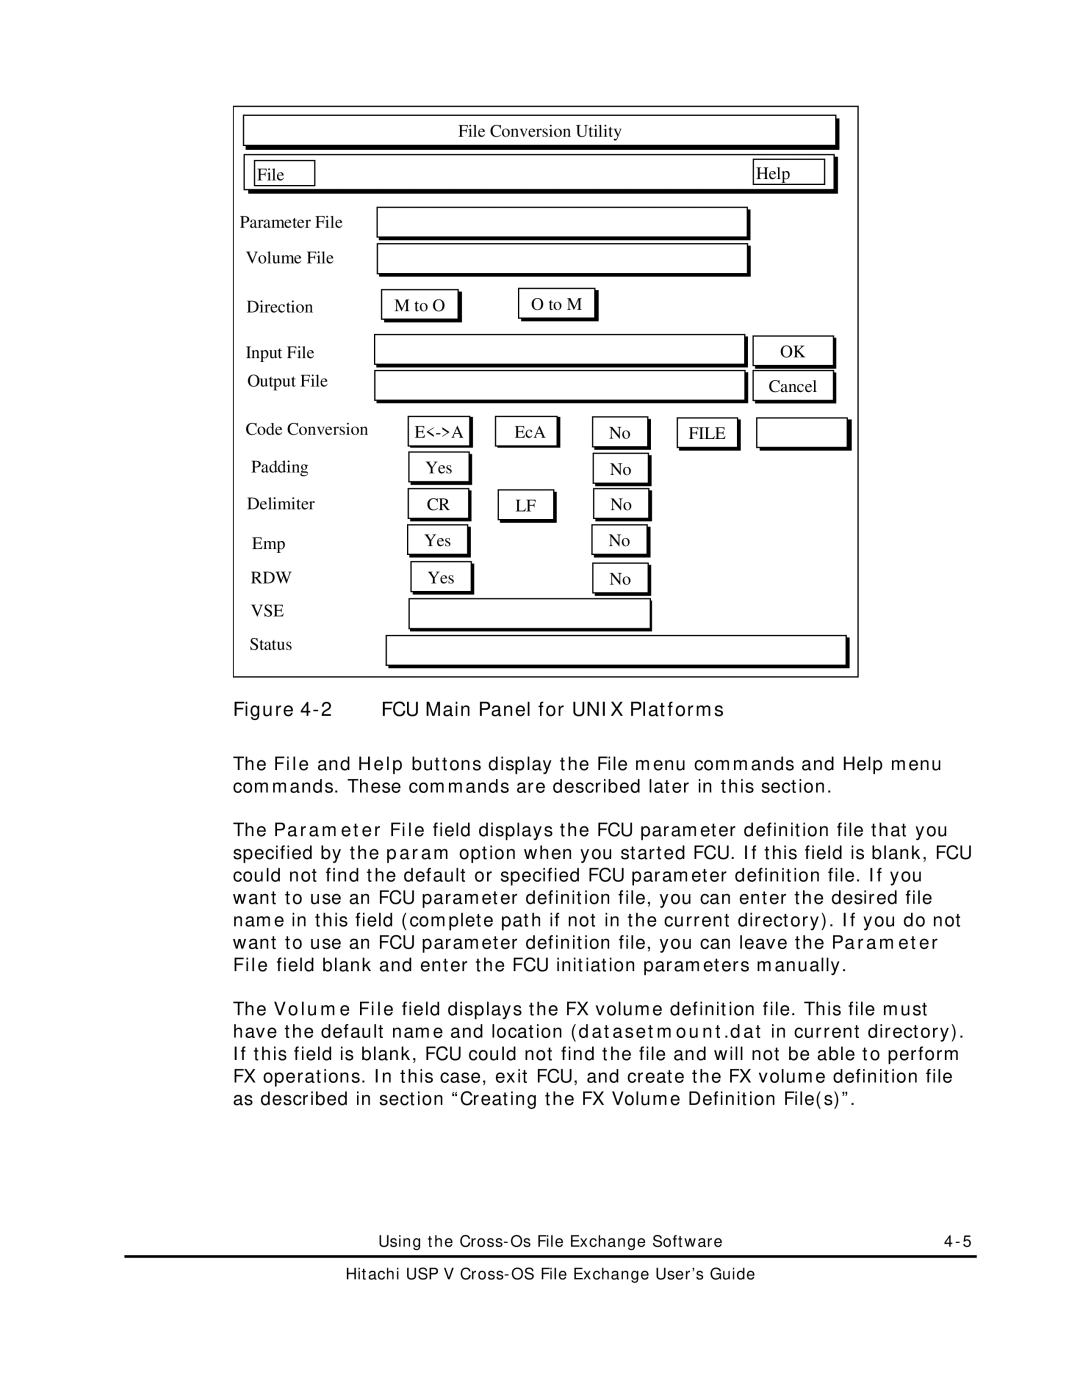 Hitachi MK-96RD647-01 manual FCU Main Panel for Unix Platforms 